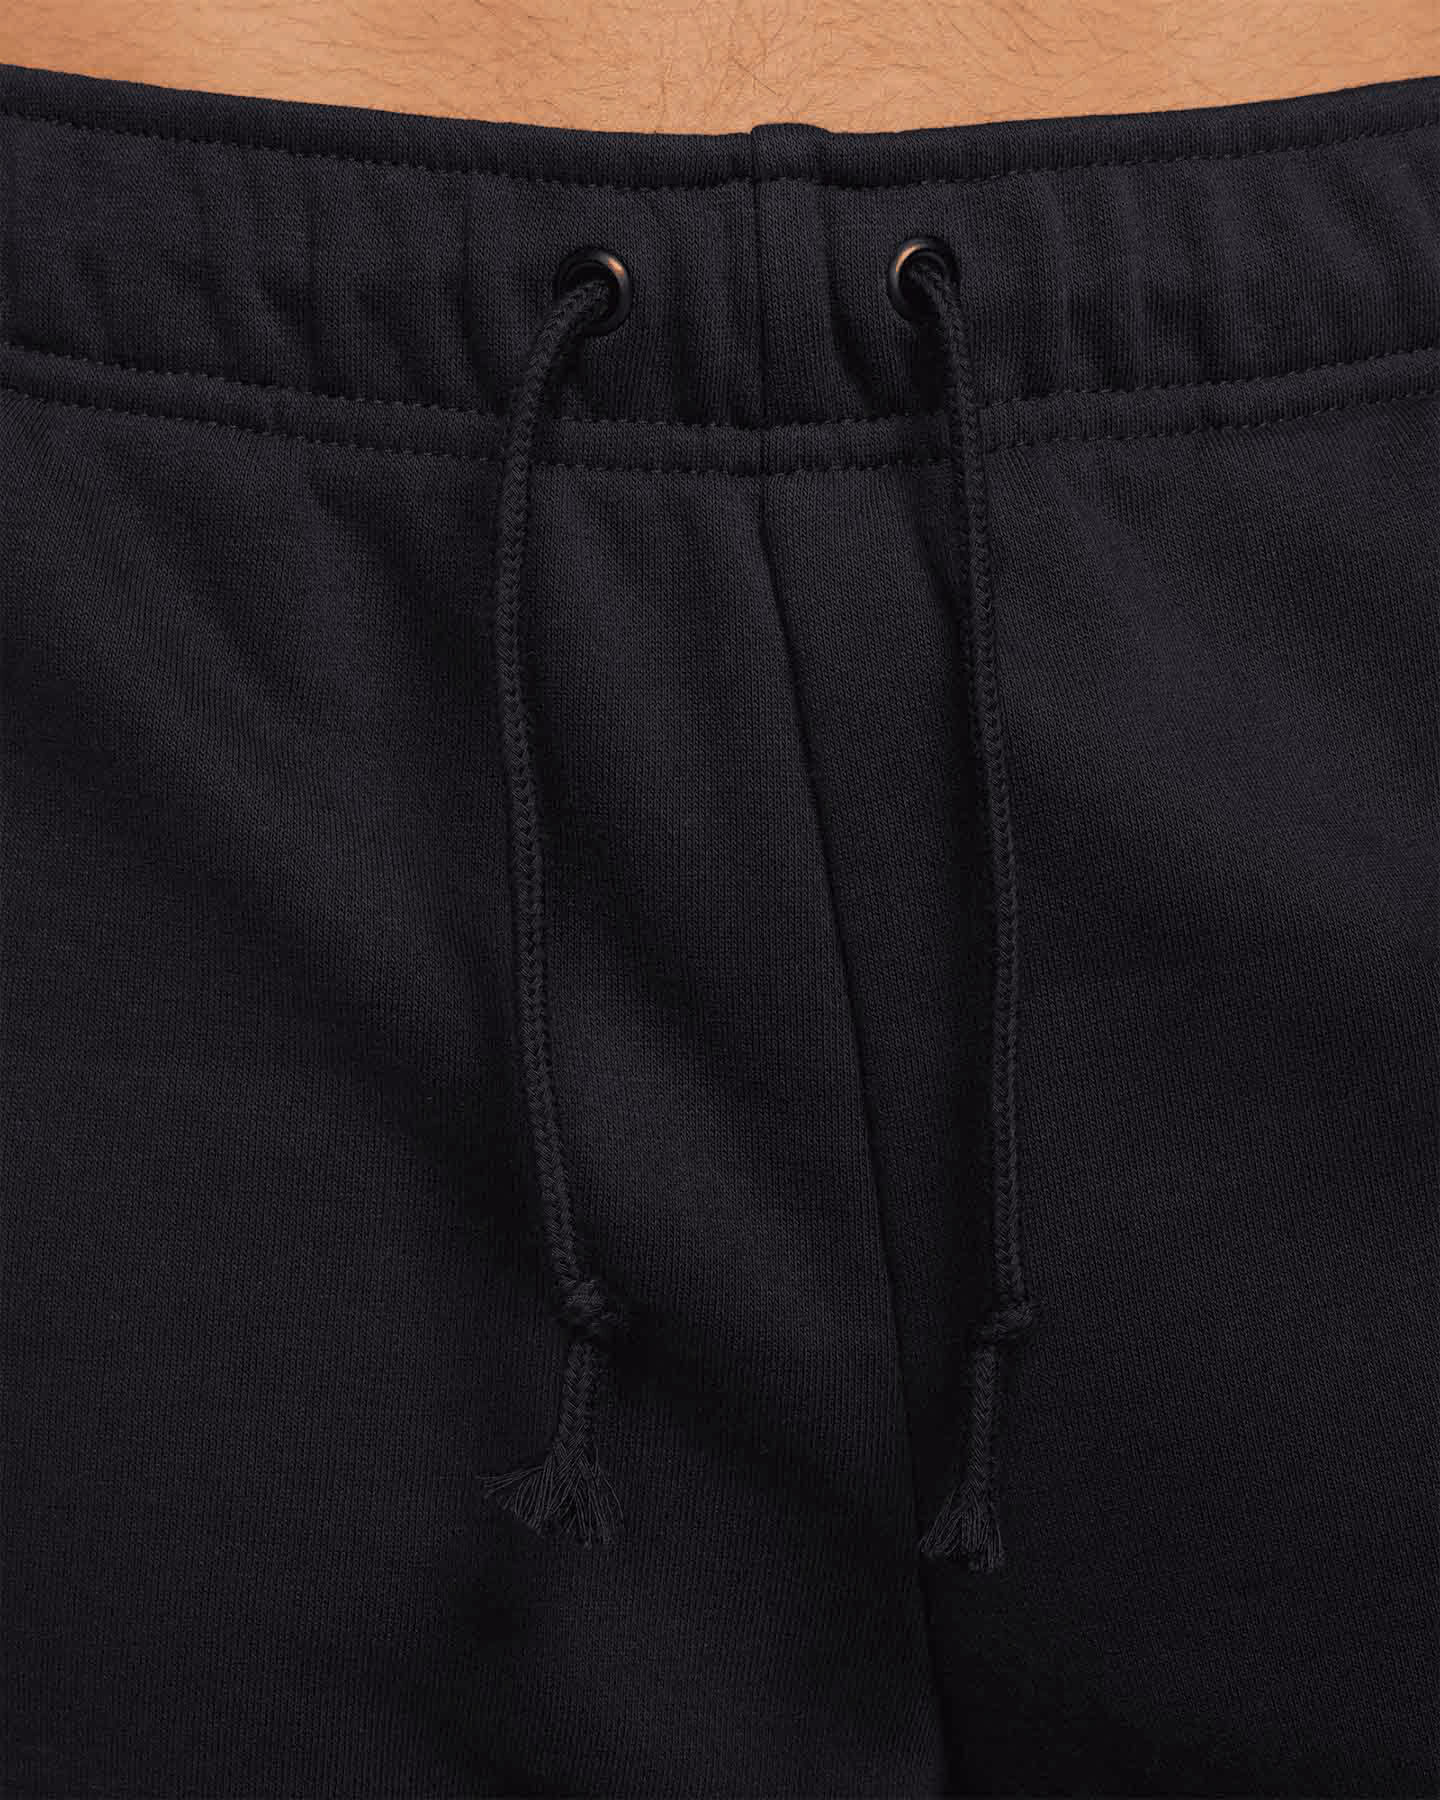  Pantalone NIKE OVER BIG LOGO W S5644459|010|XS scatto 2